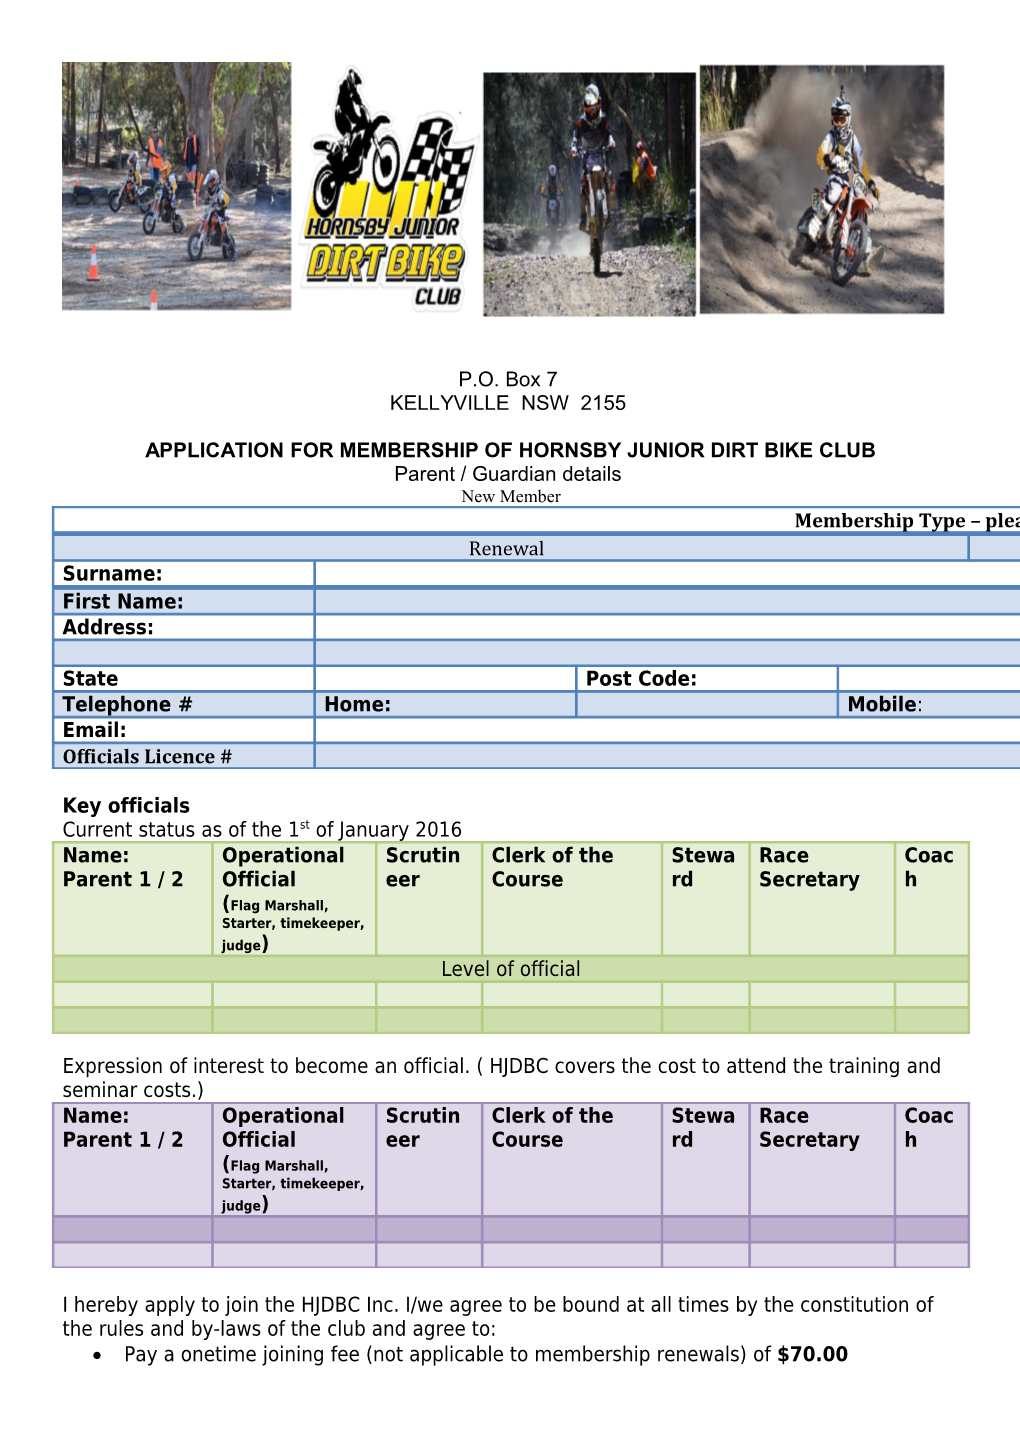 Application for Membership of Hornsby Junior Dirt Bike Club